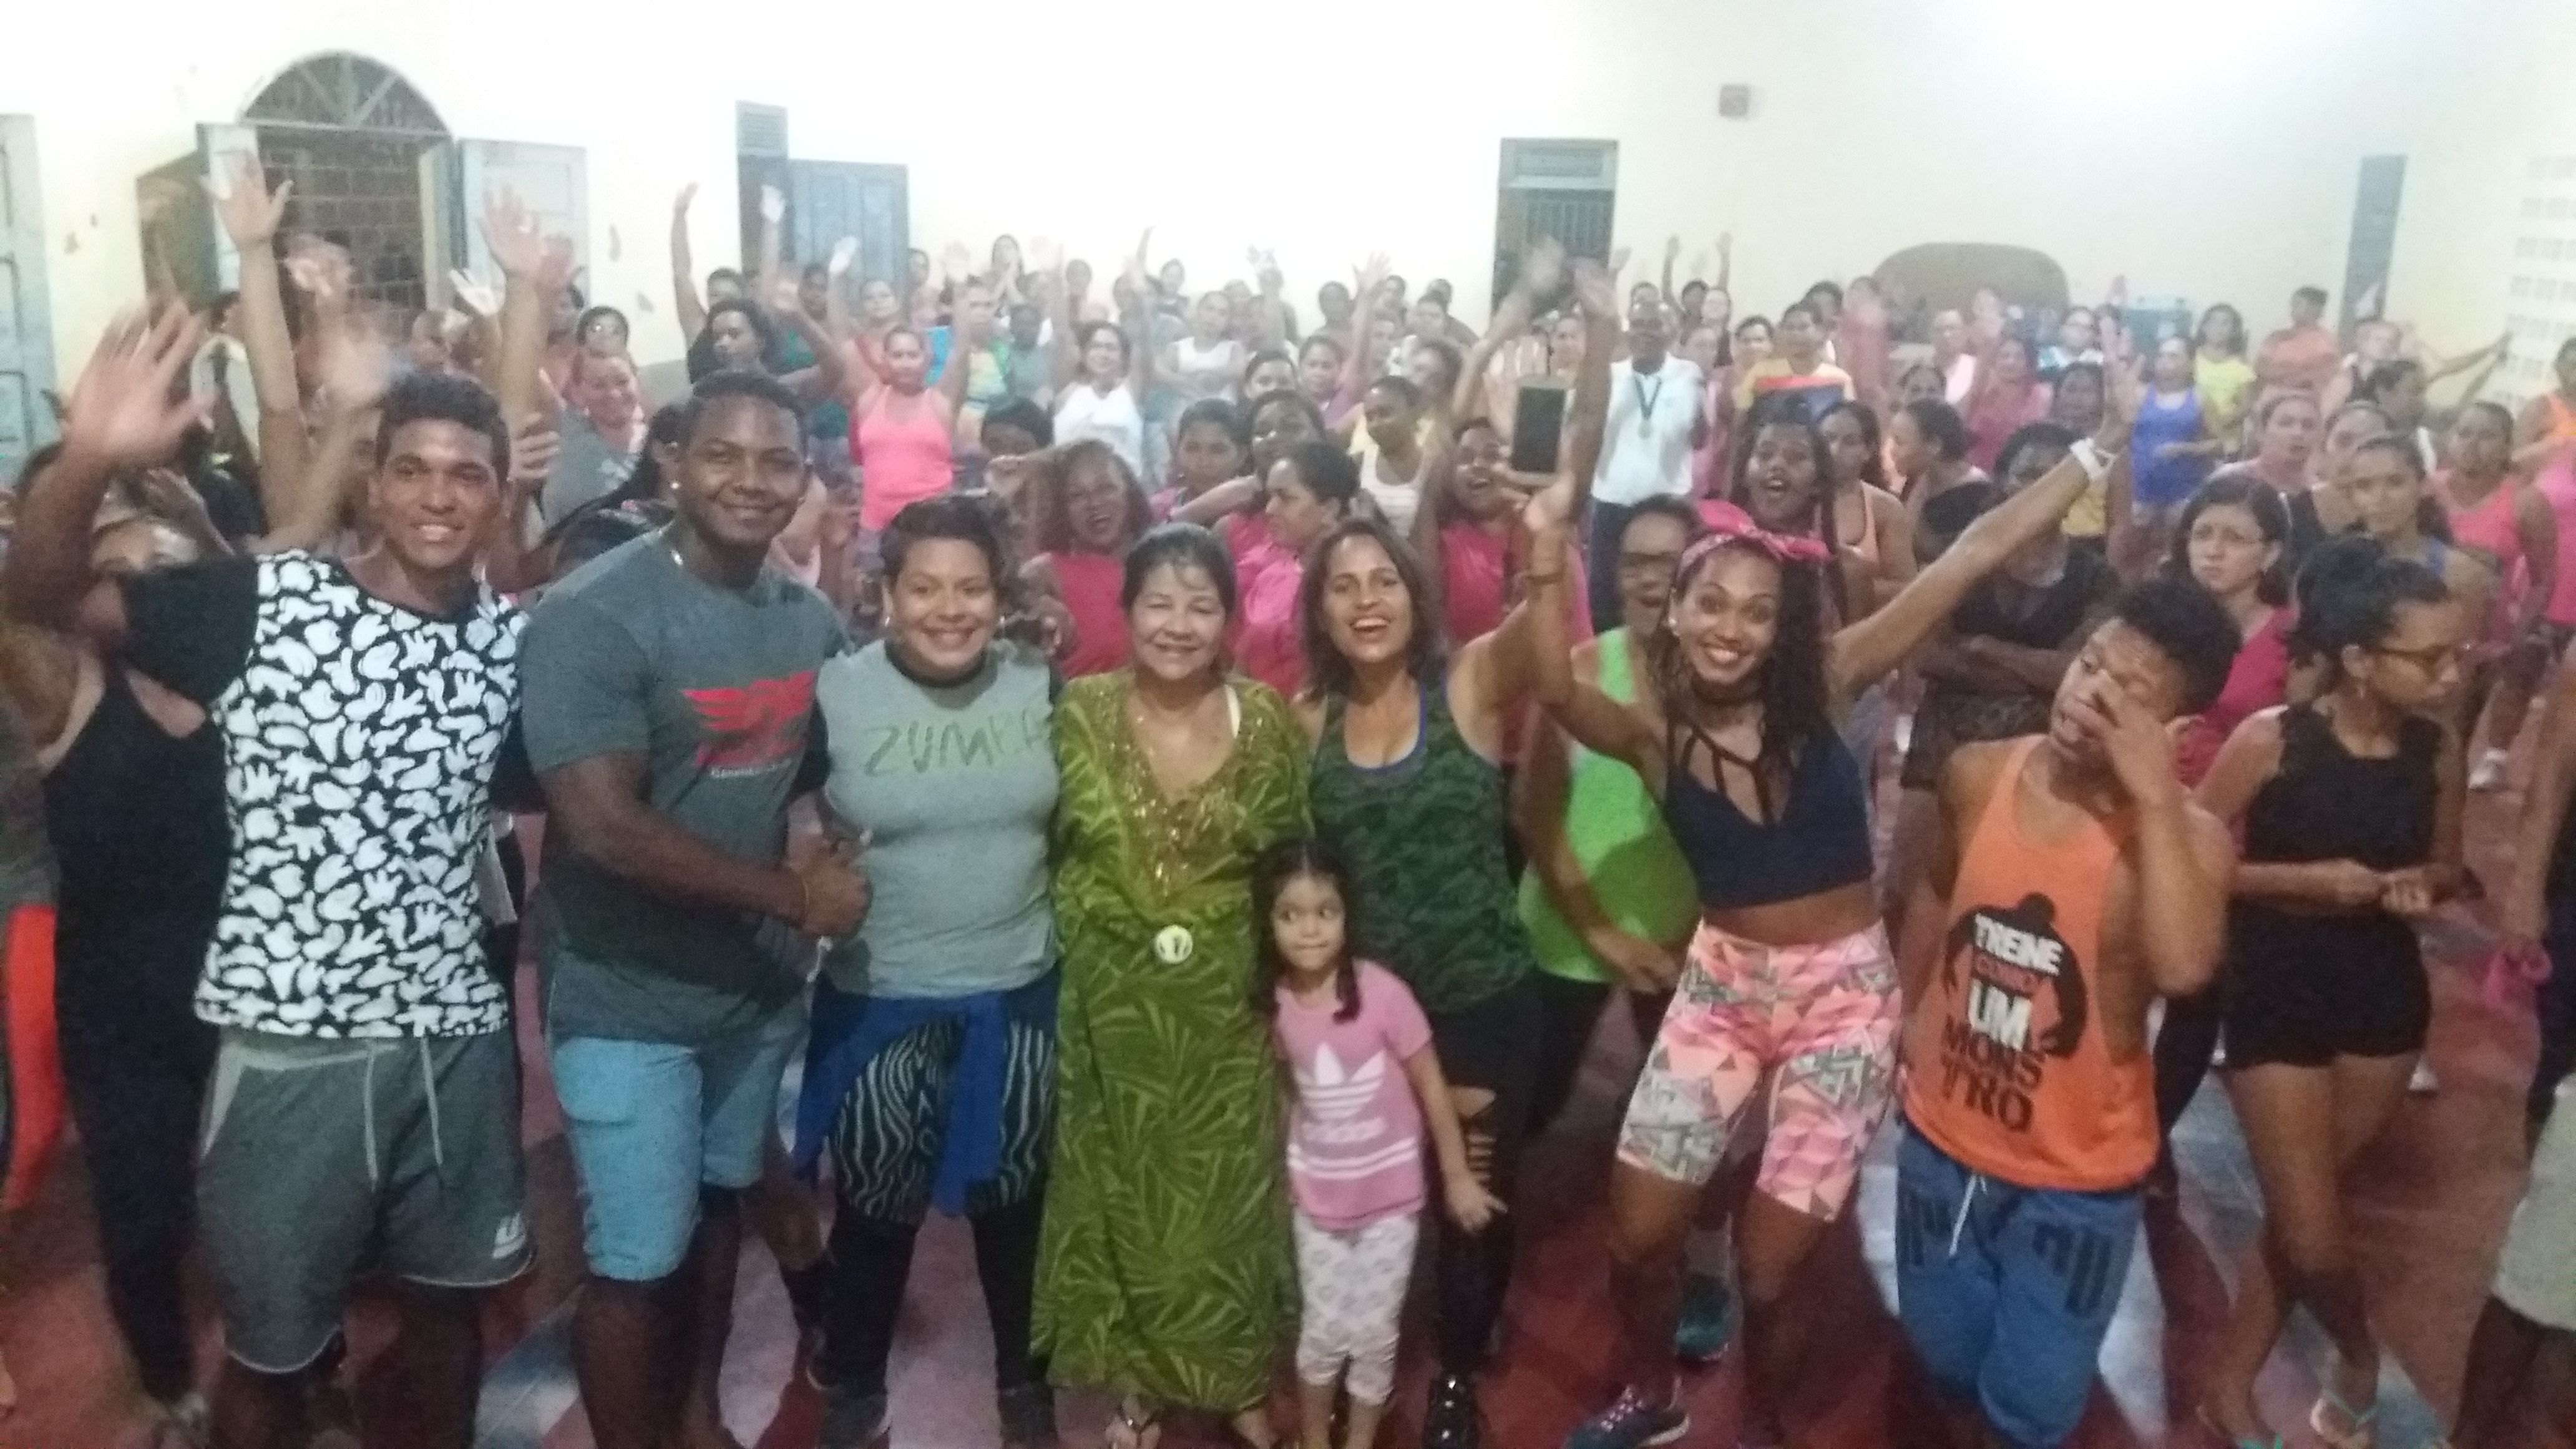 Foto de Pólo II da Zumba no bairro Pirapora completa um ano de atividade mantido pela vereadora Fátima Araújo